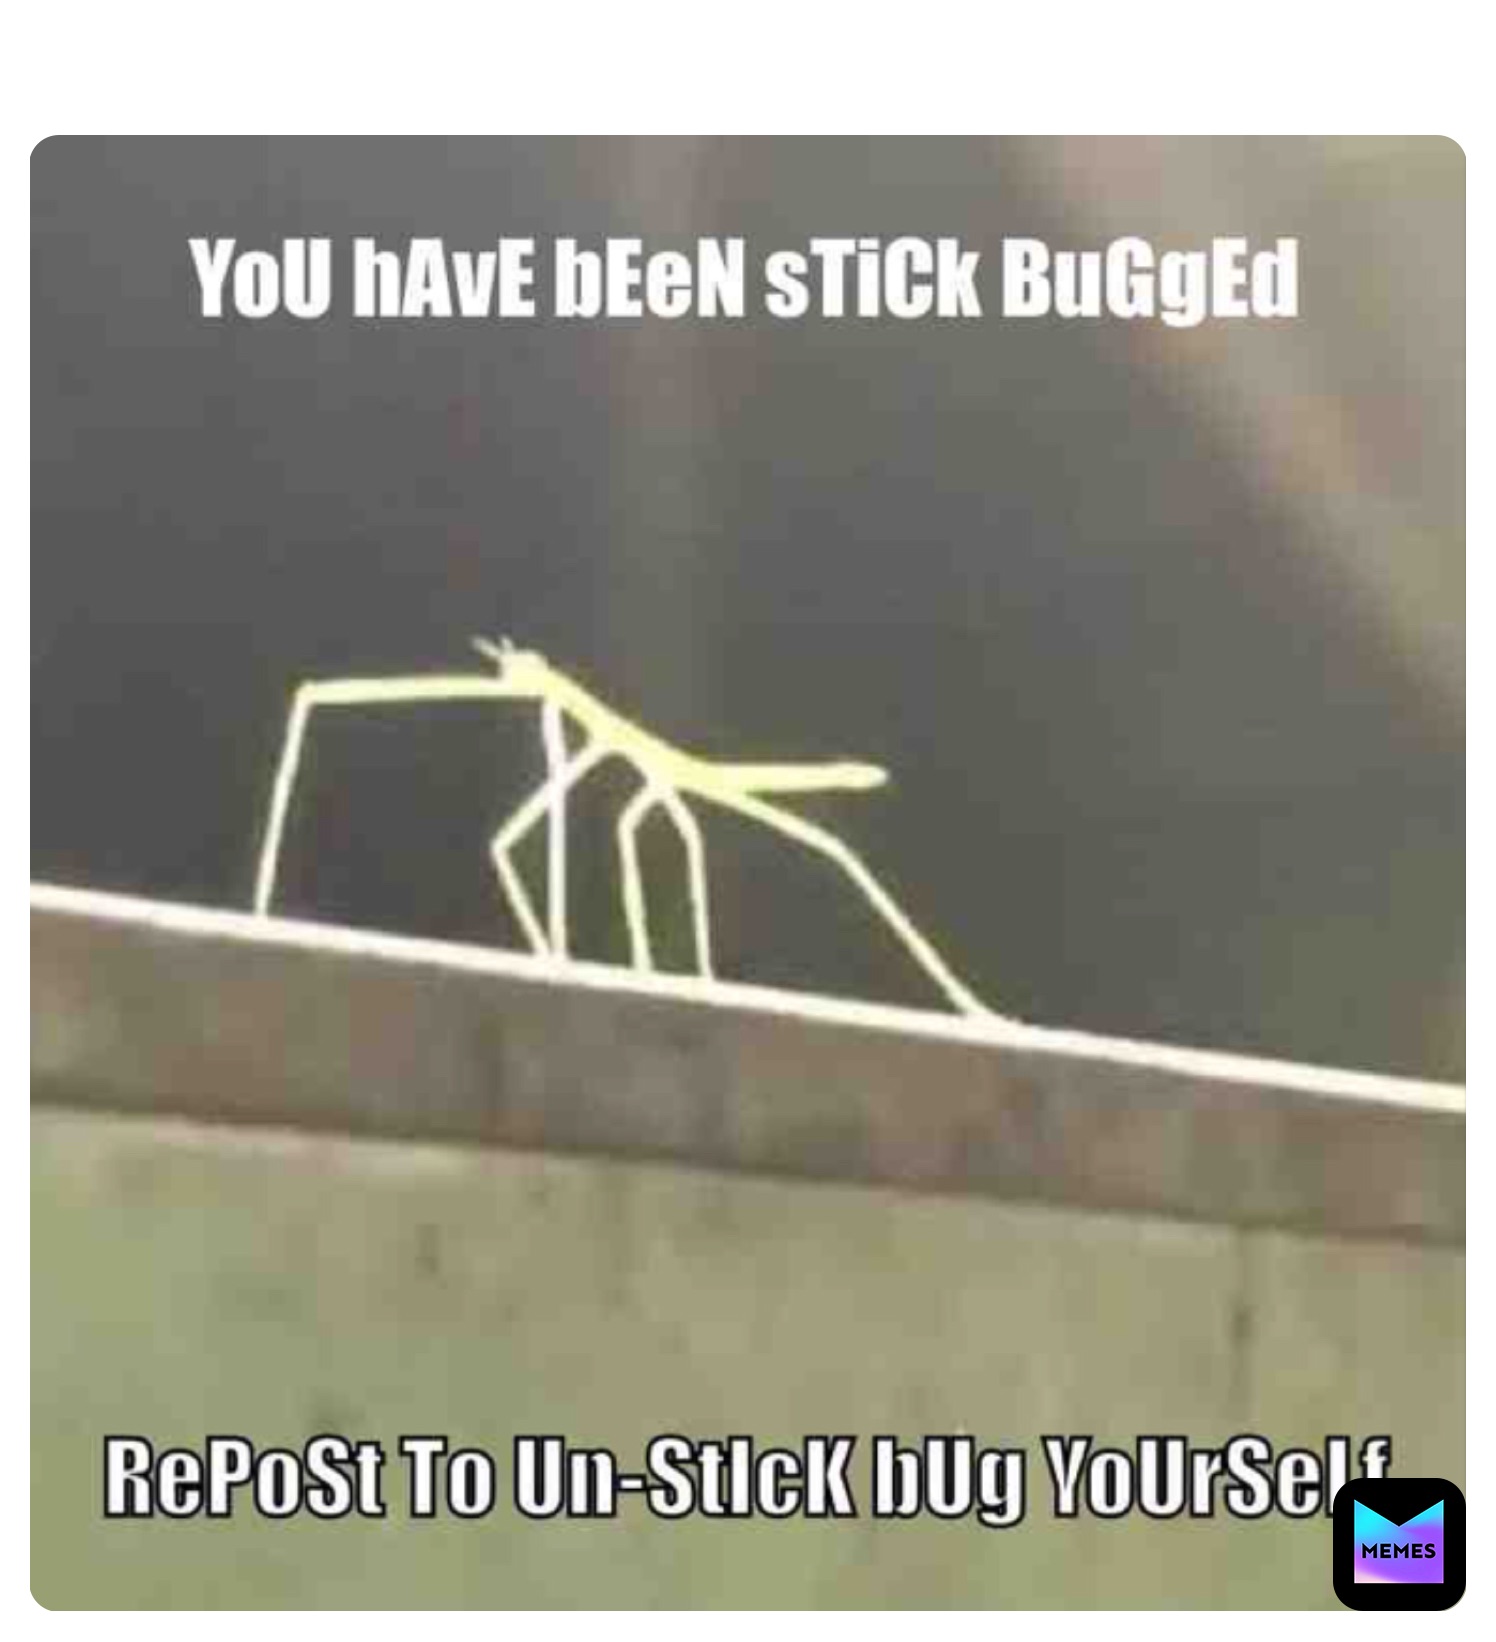 Get Stick Bugged lol